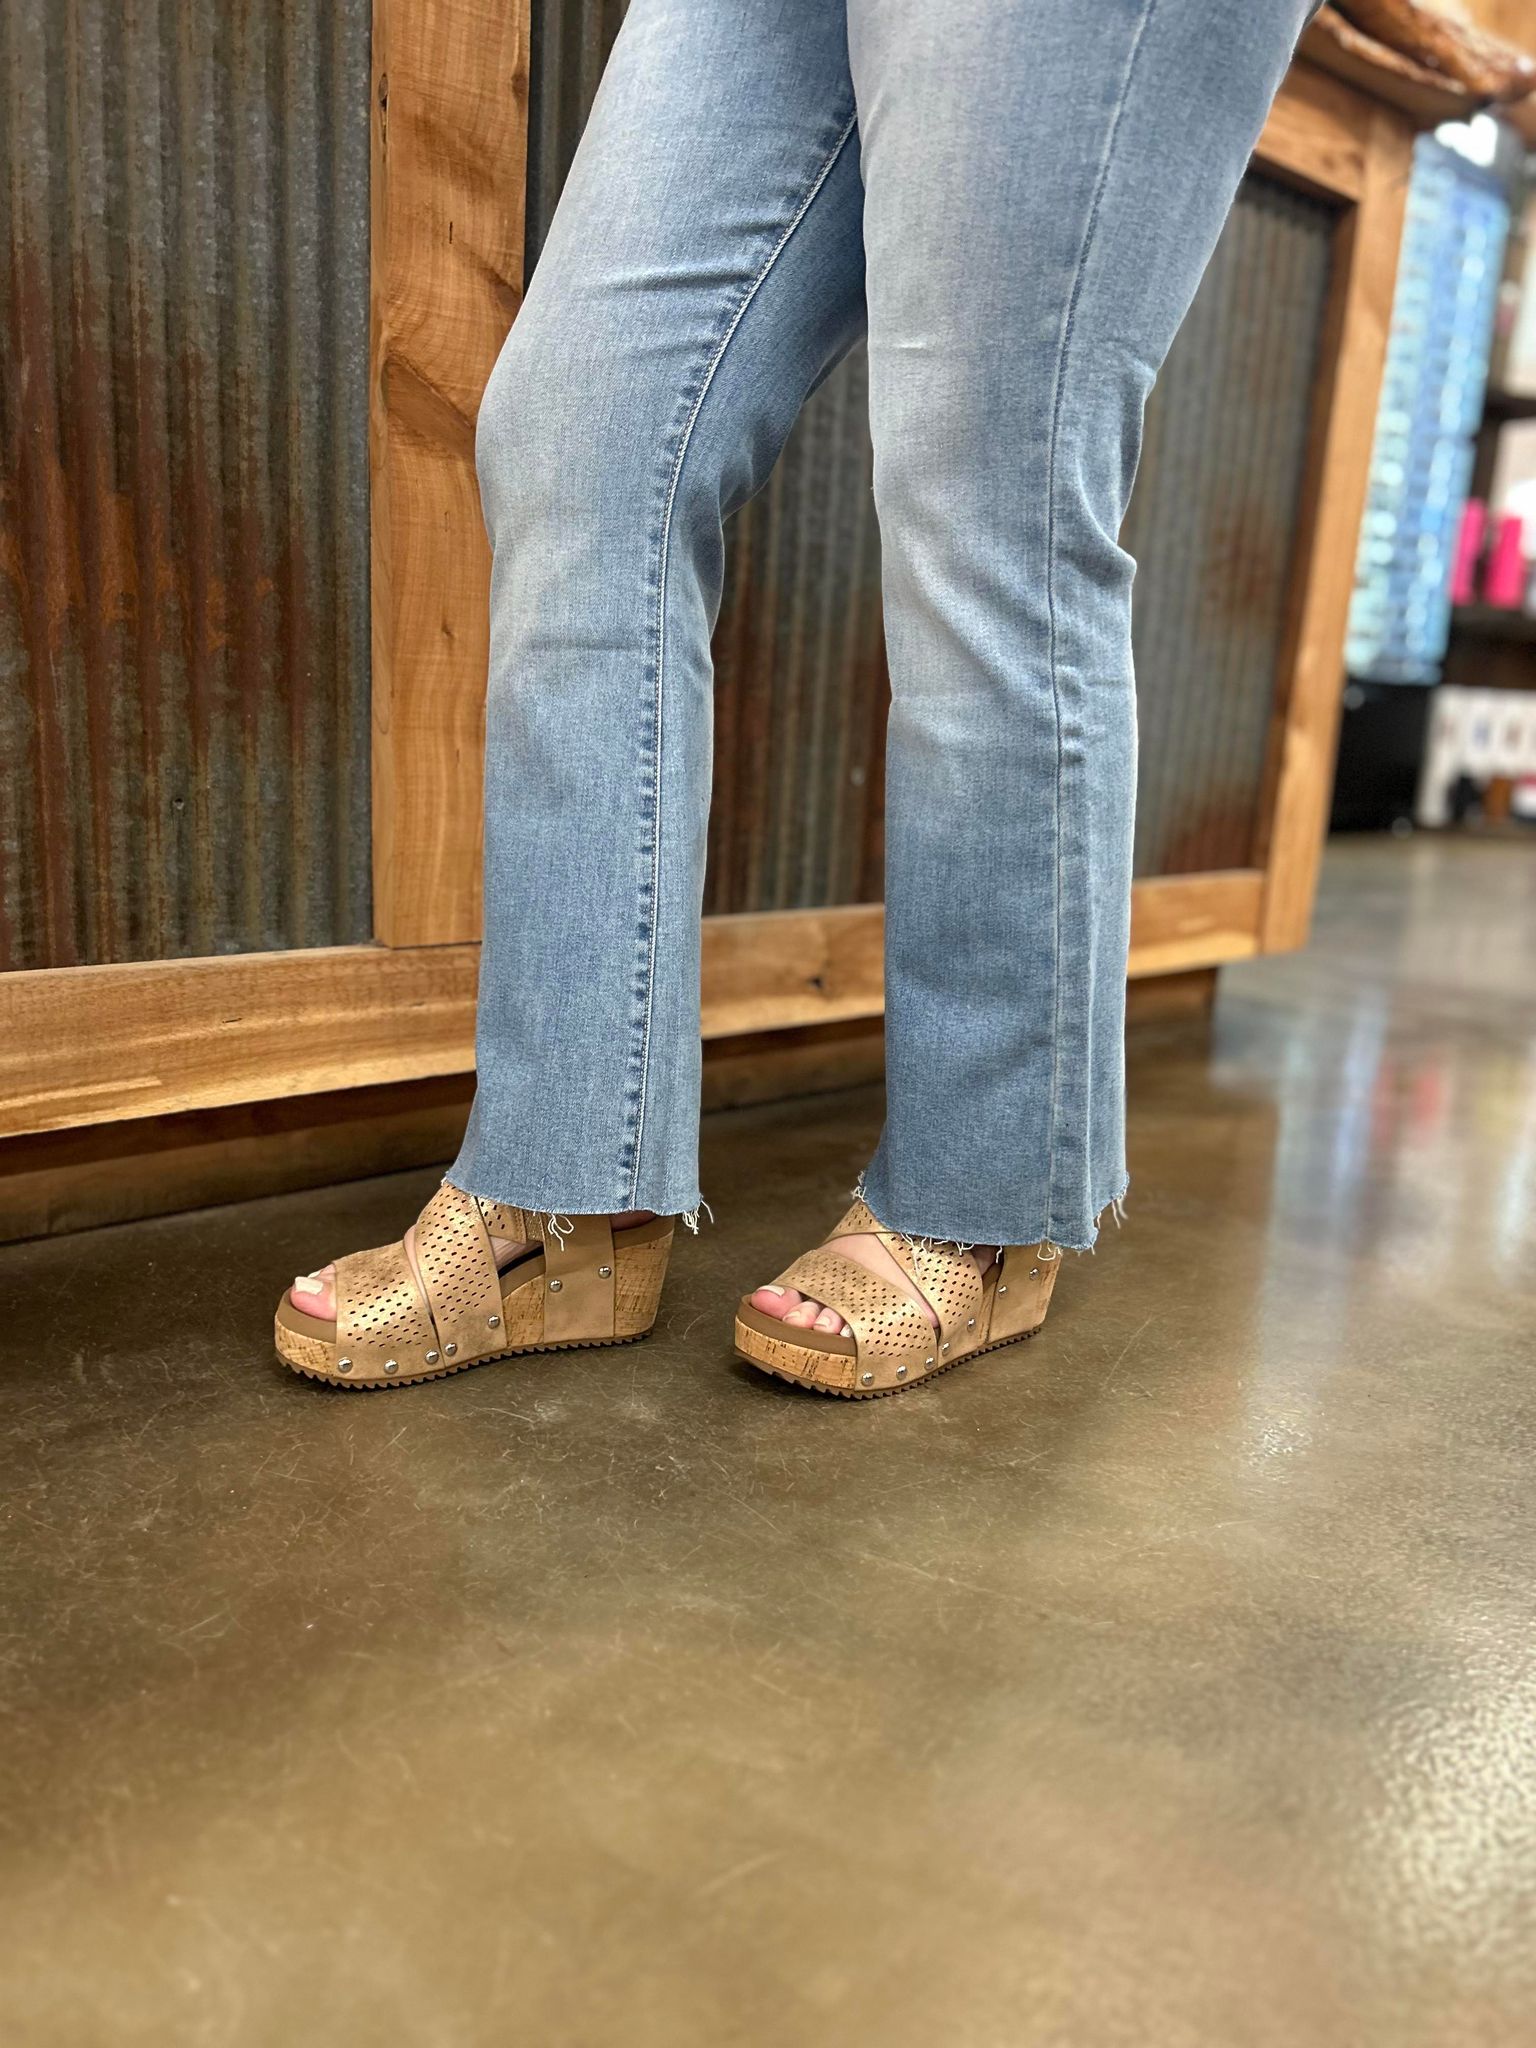 Hidden Hannah Cropped Flare Jeans-Women's Denim-HIDDEN-Lucky J Boots & More, Women's, Men's, & Kids Western Store Located in Carthage, MO